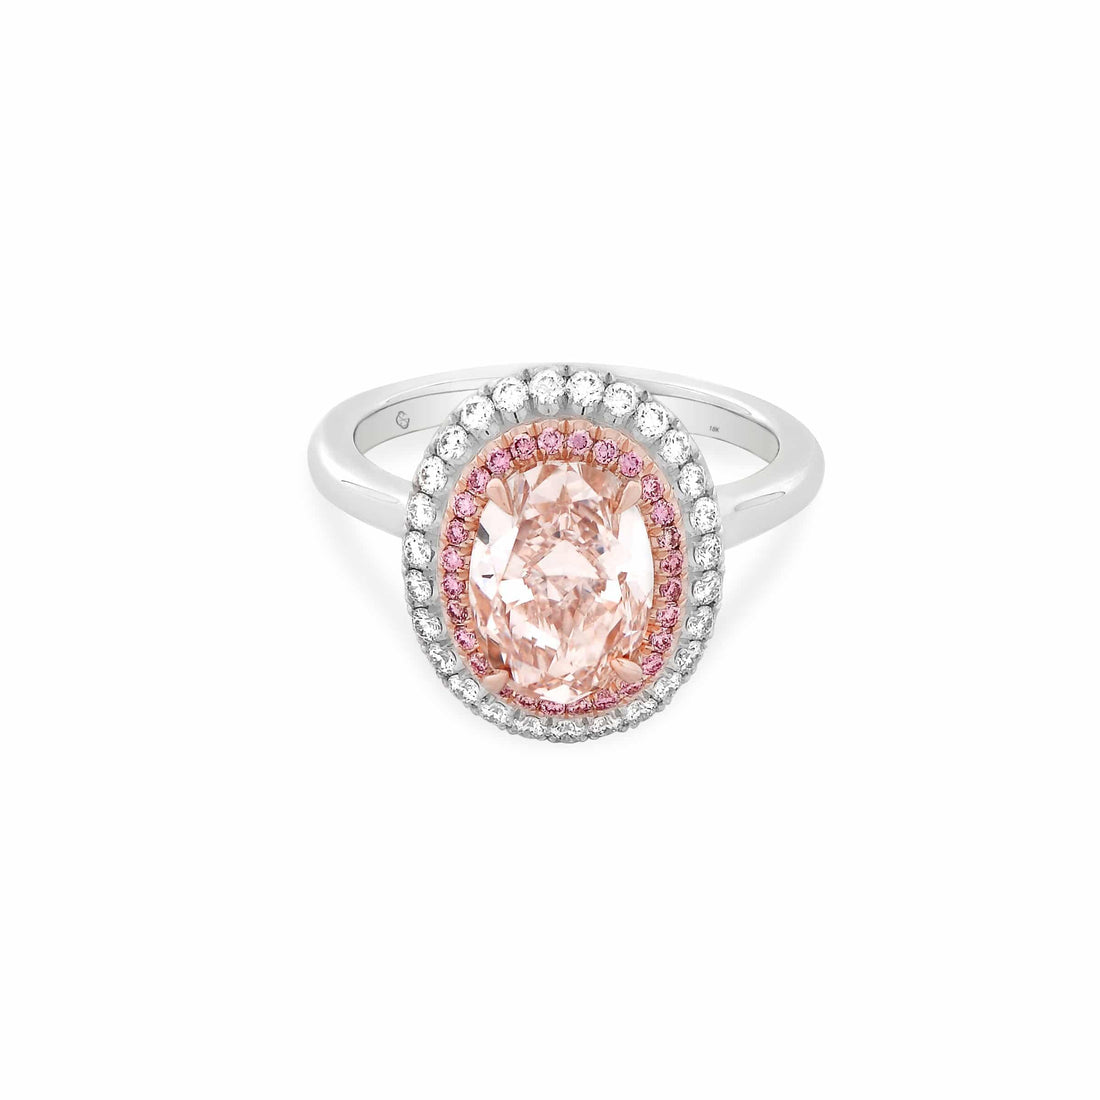 Tiffany diamond engagement ring